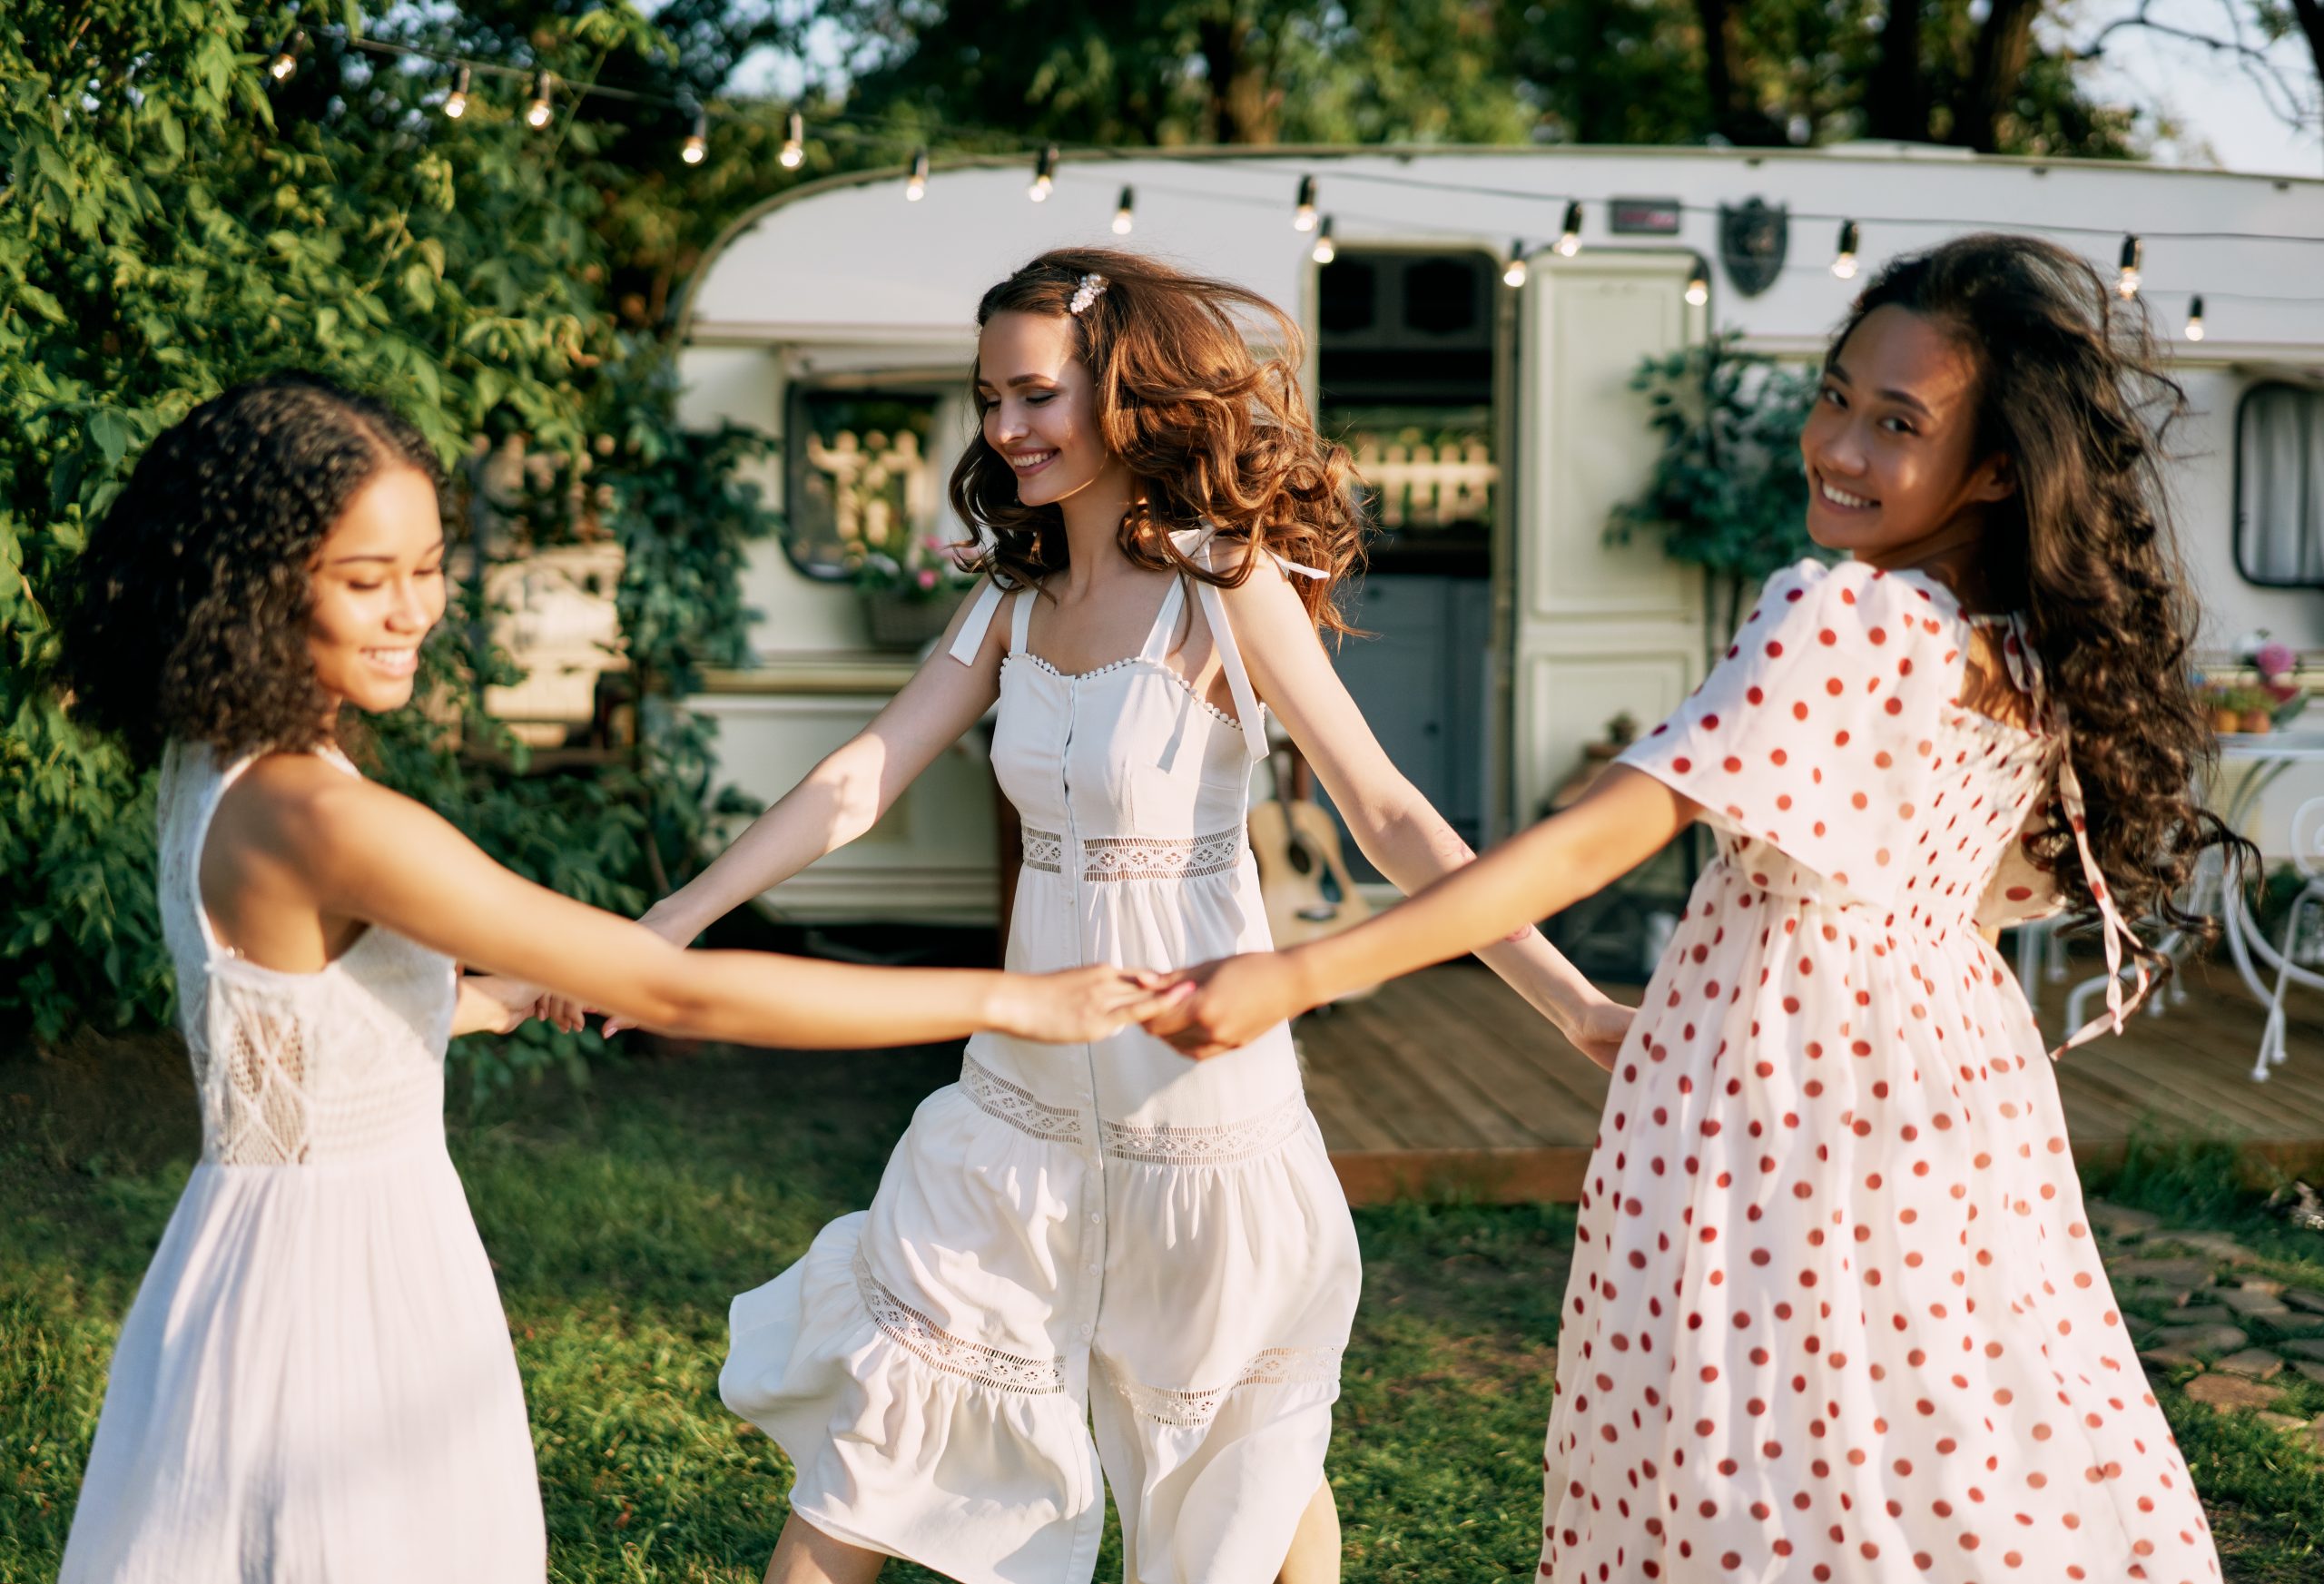 Three smiling women dancing in circle during picnic